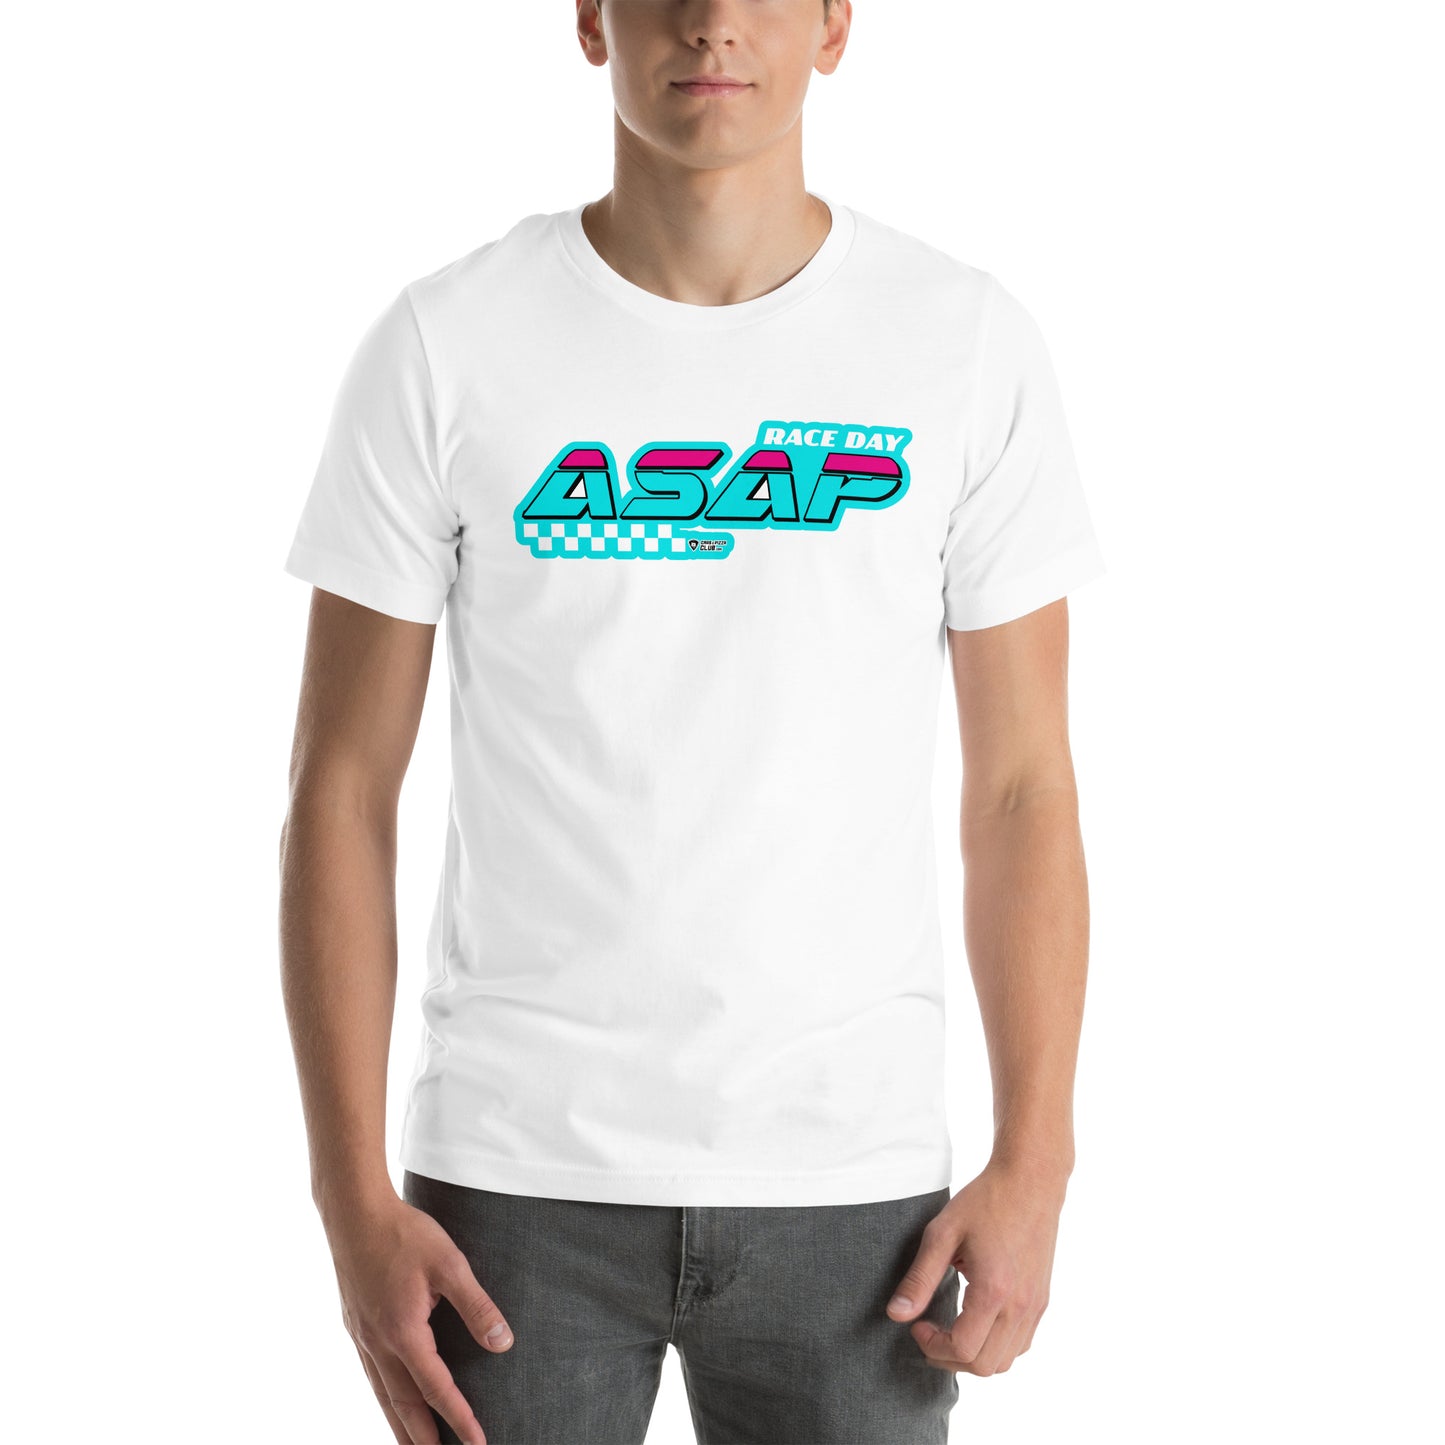 Camiseta unisex "Race Day ASAP" Blue